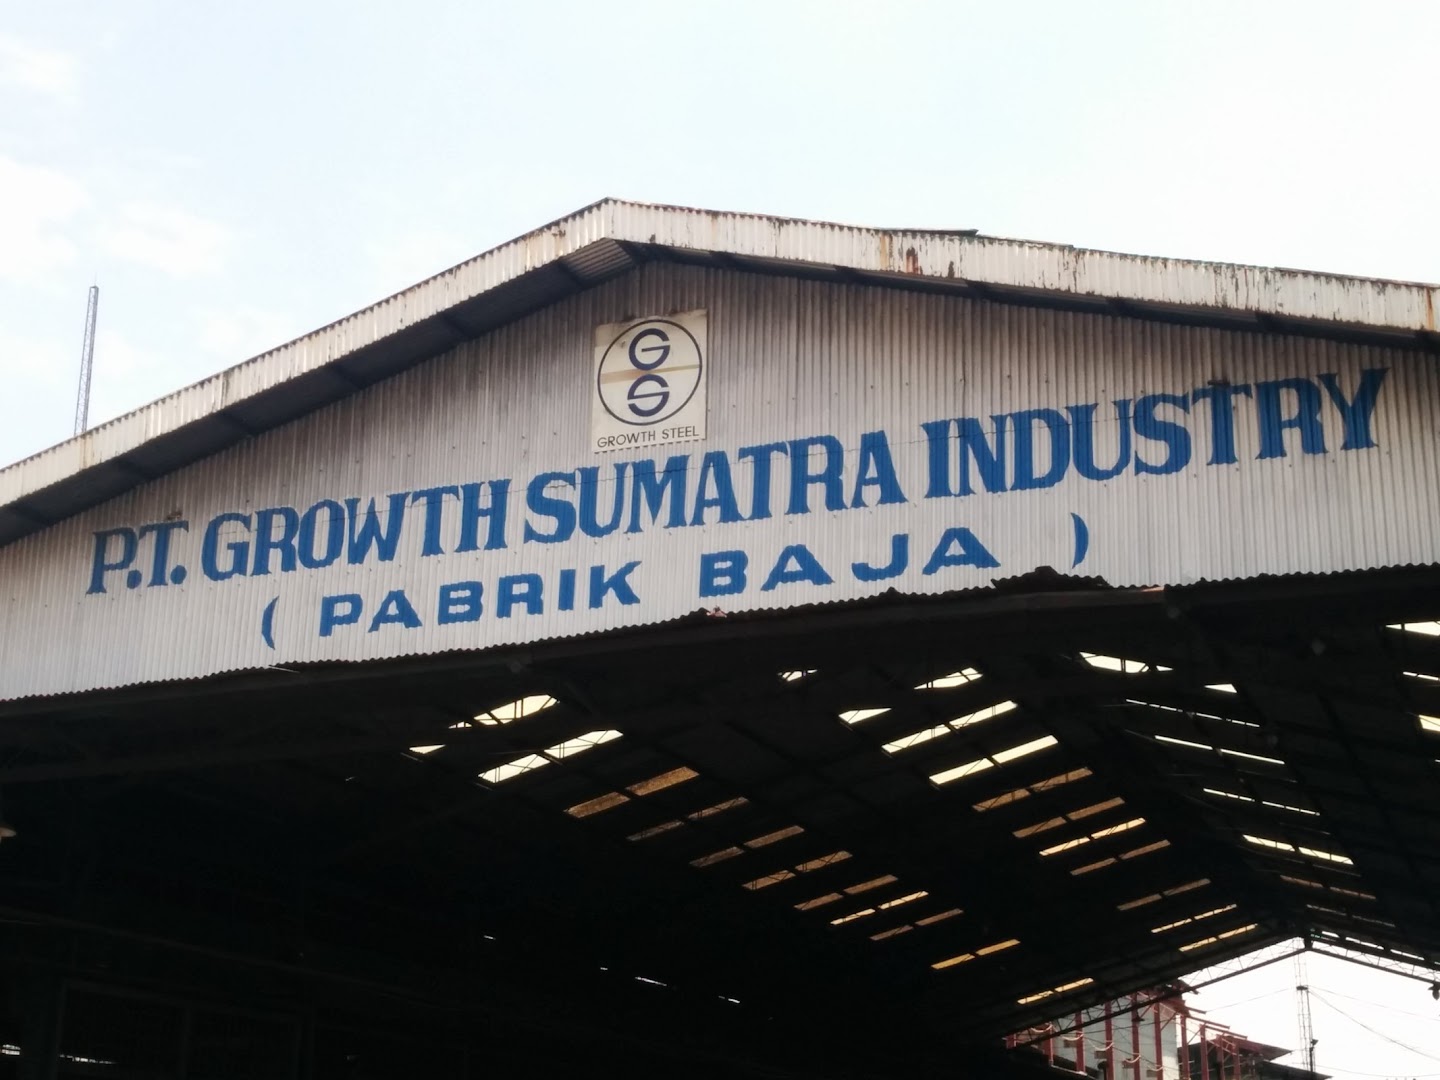 P.t. Growth Sumatra Industri Photo